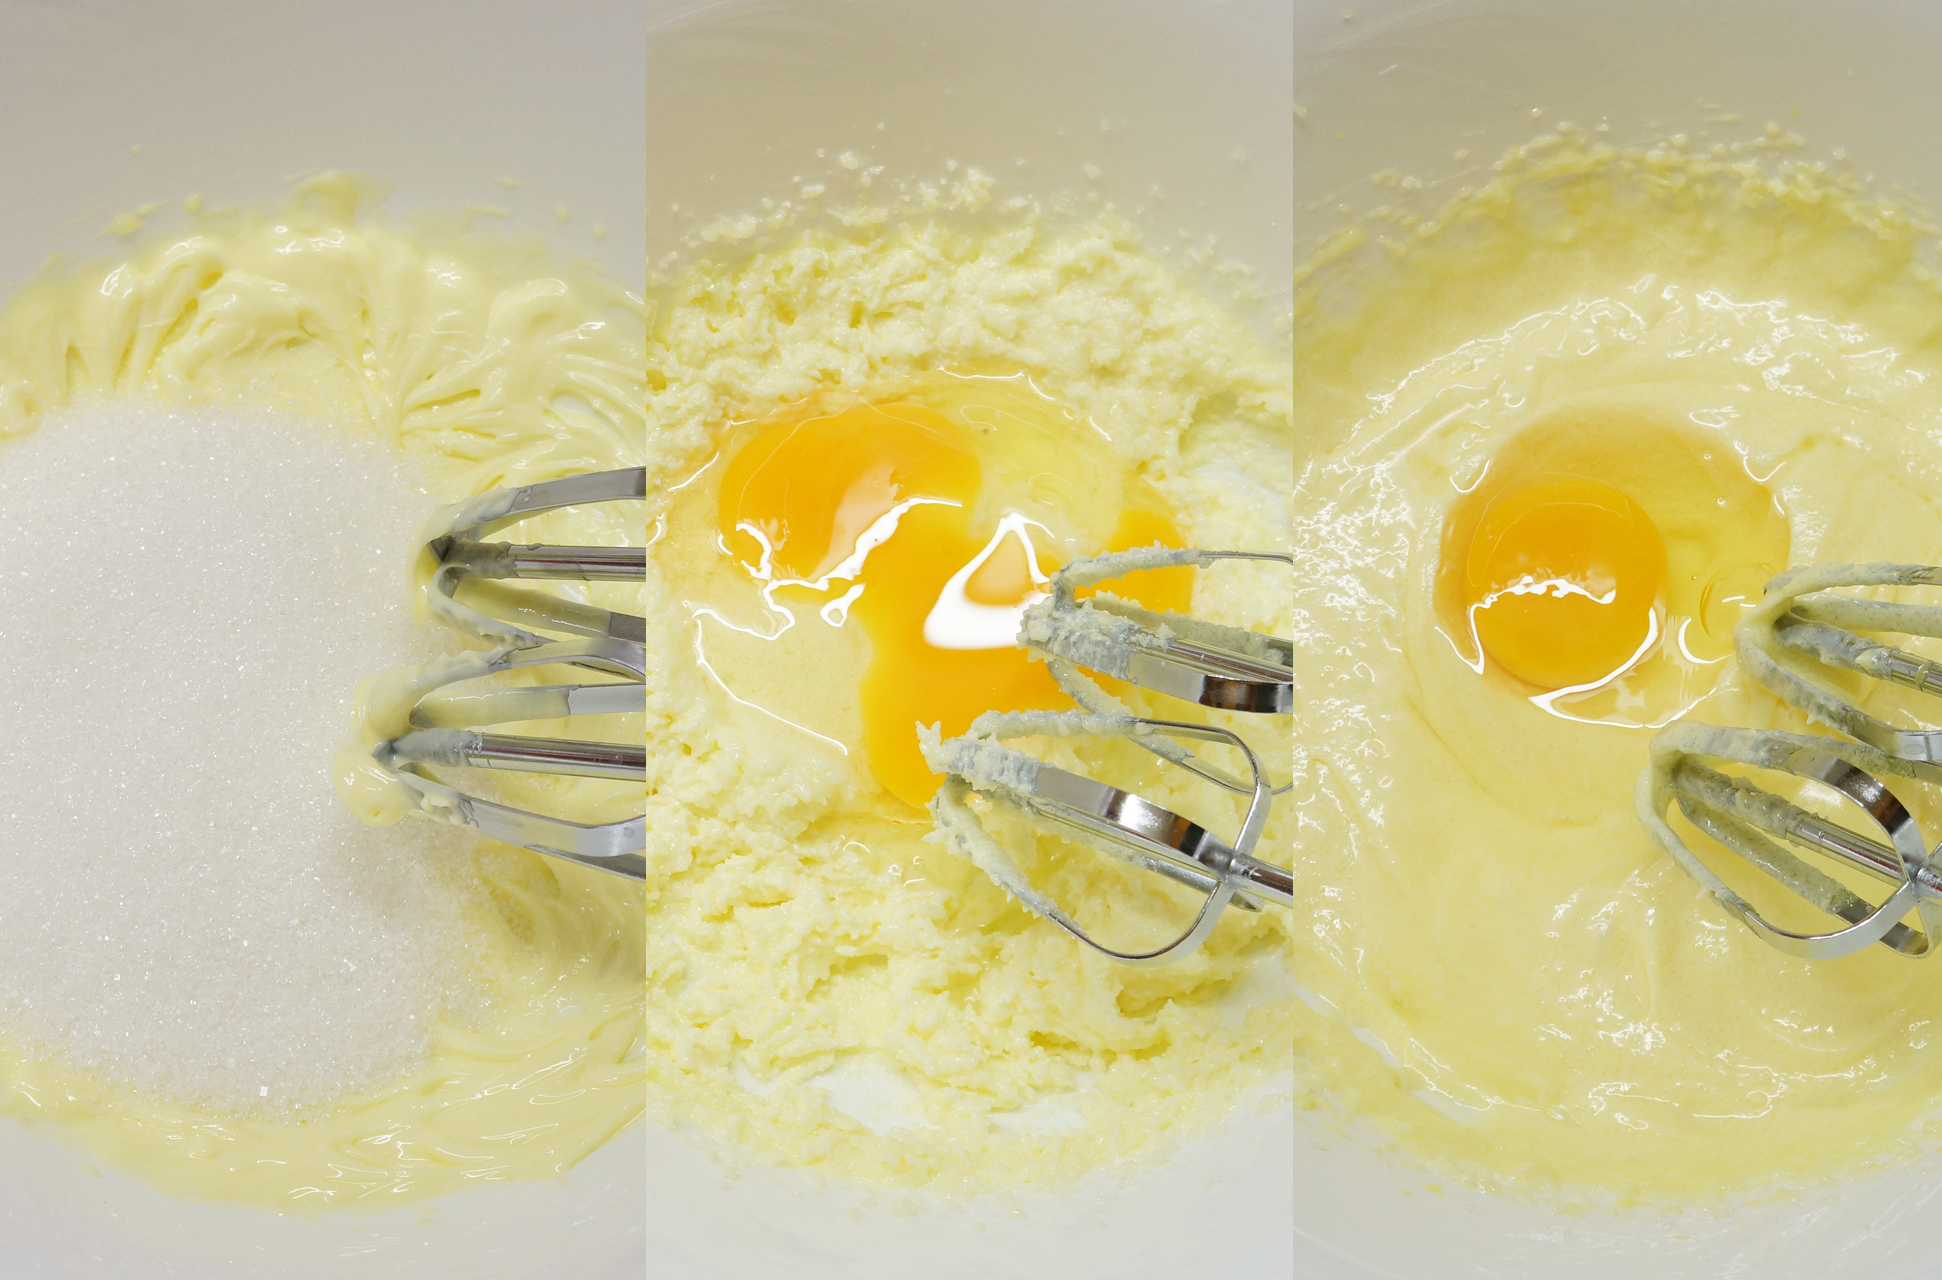 Яйцо взбитое с маслом. Взбитое сливочное масло. Взбитые яйца. Сливочное масло с цедрой. Сливки и желток.